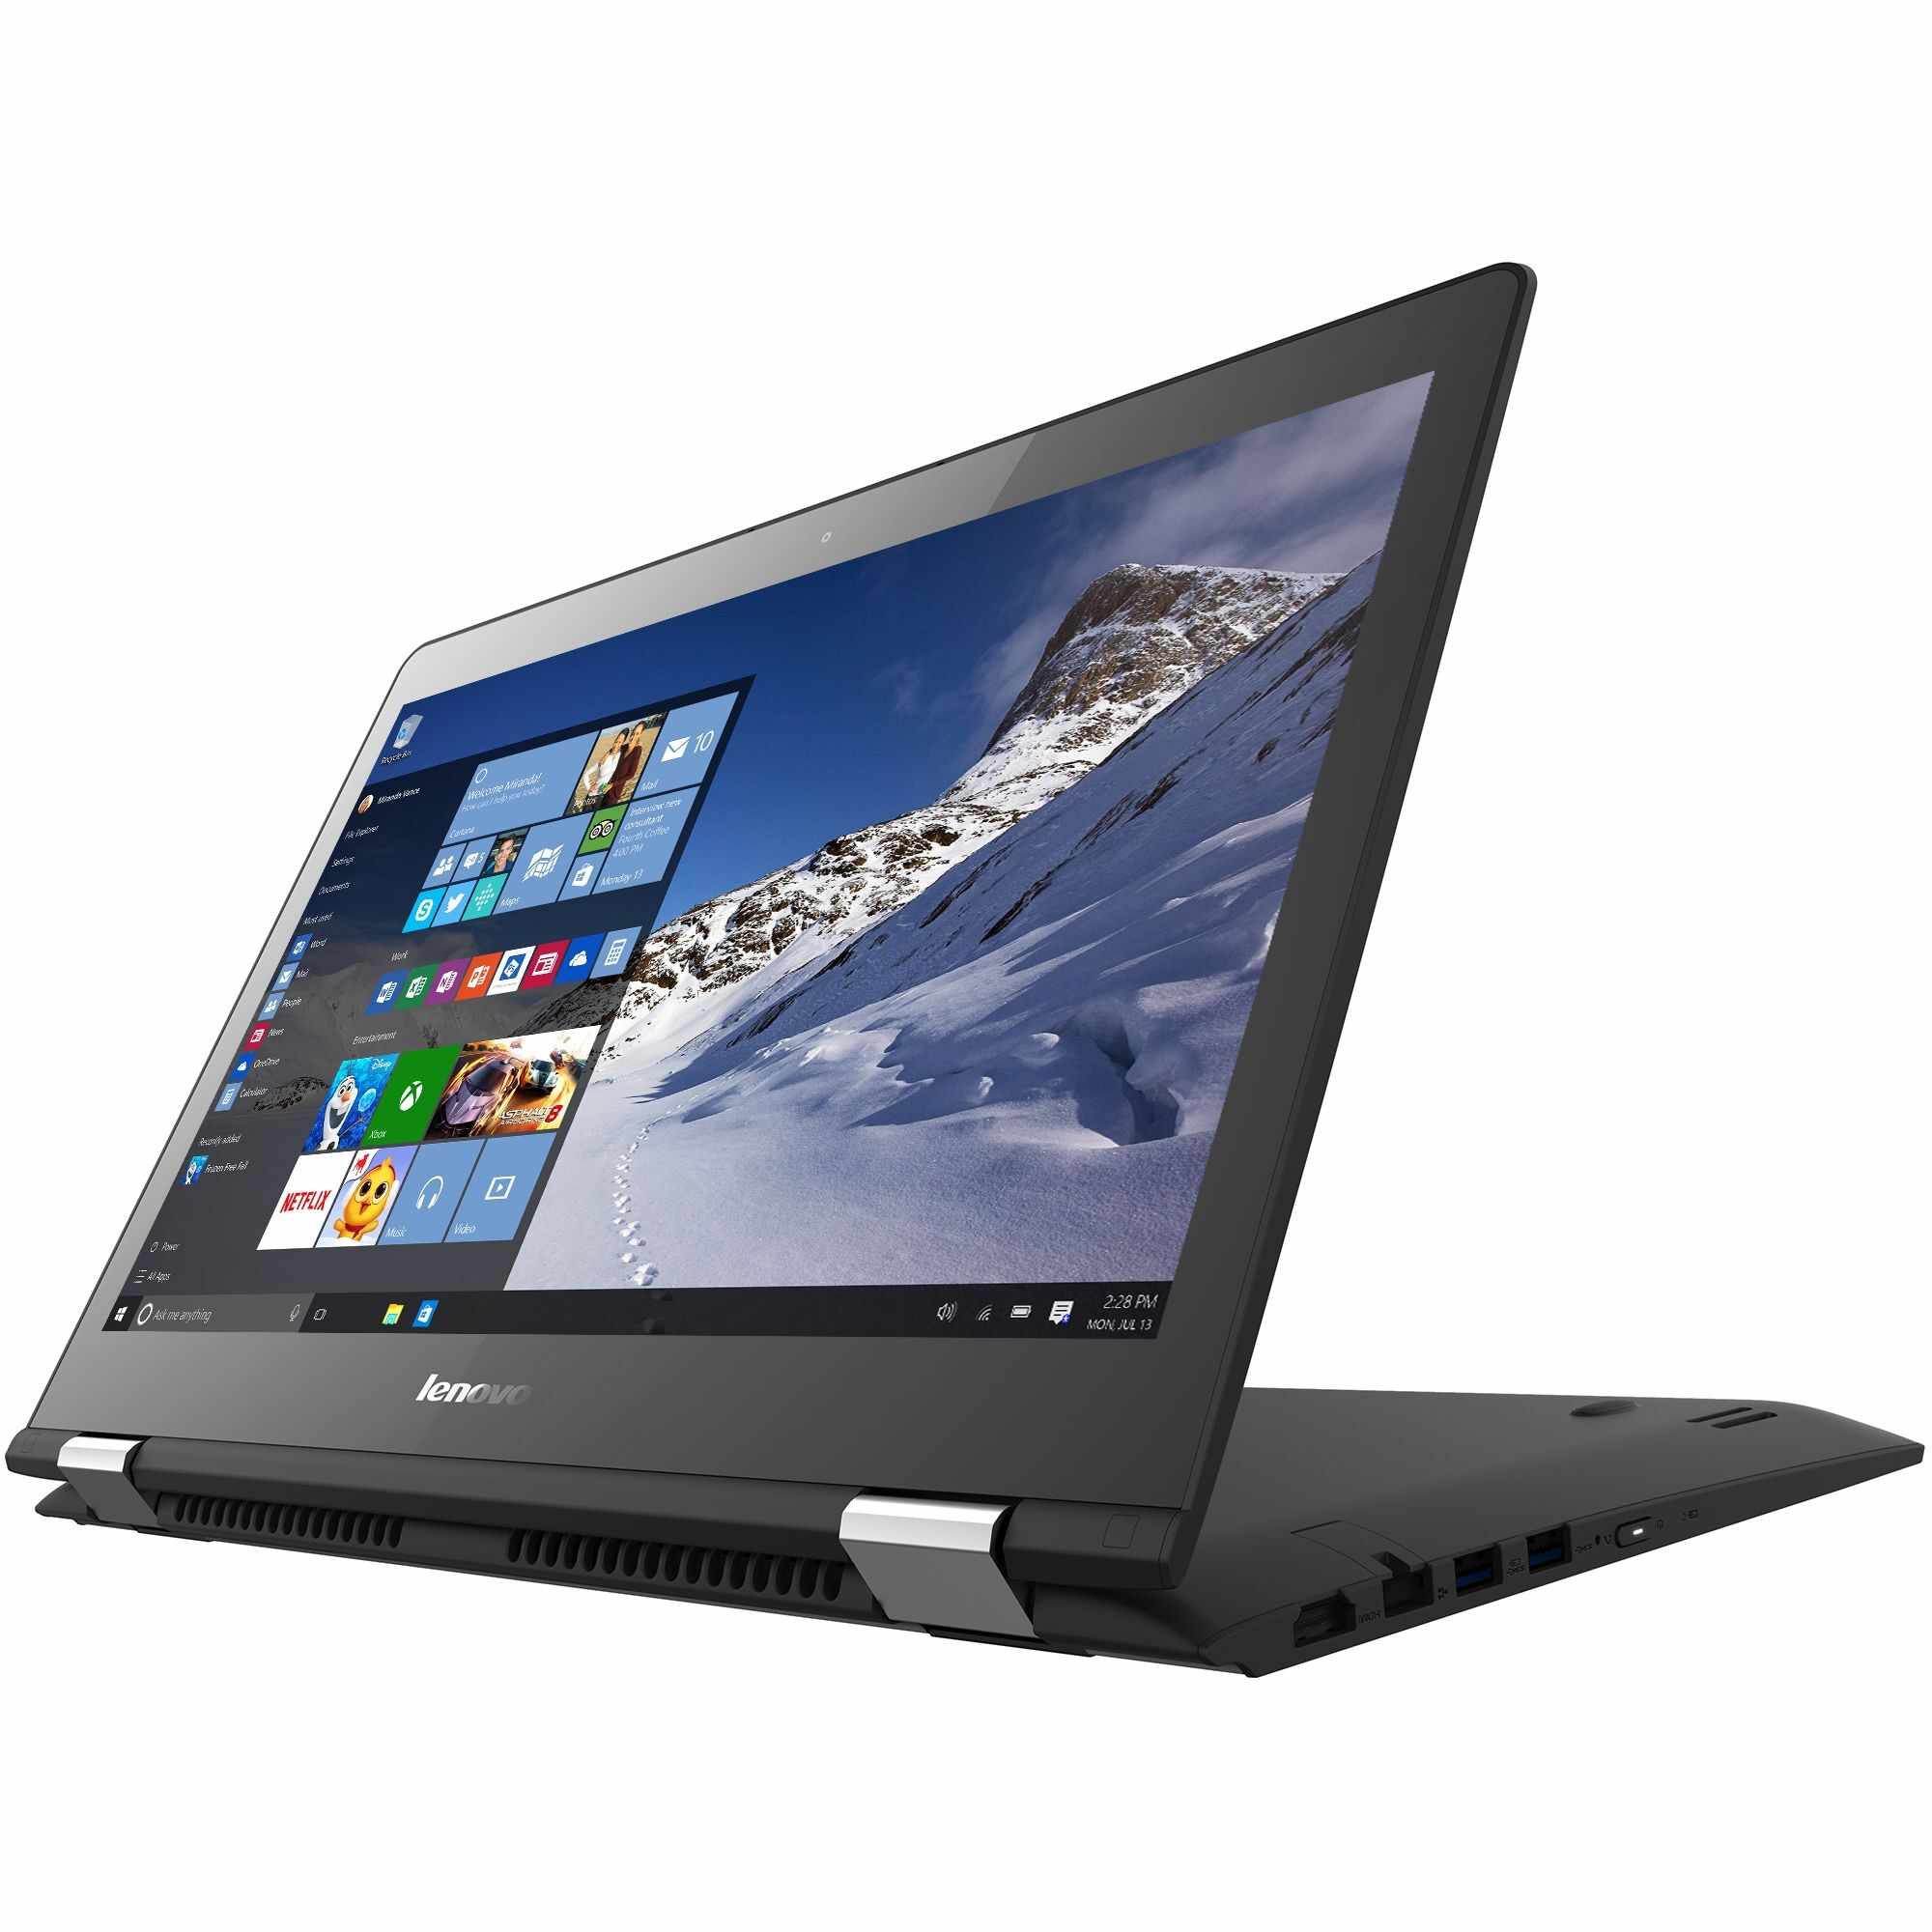 Laptop 2 in 1 Lenovo Yoga 500, Intel Core i3-5005U, 4GB DDR3, HDD 1TB, Intel HD Graphics, Windows 10 Home